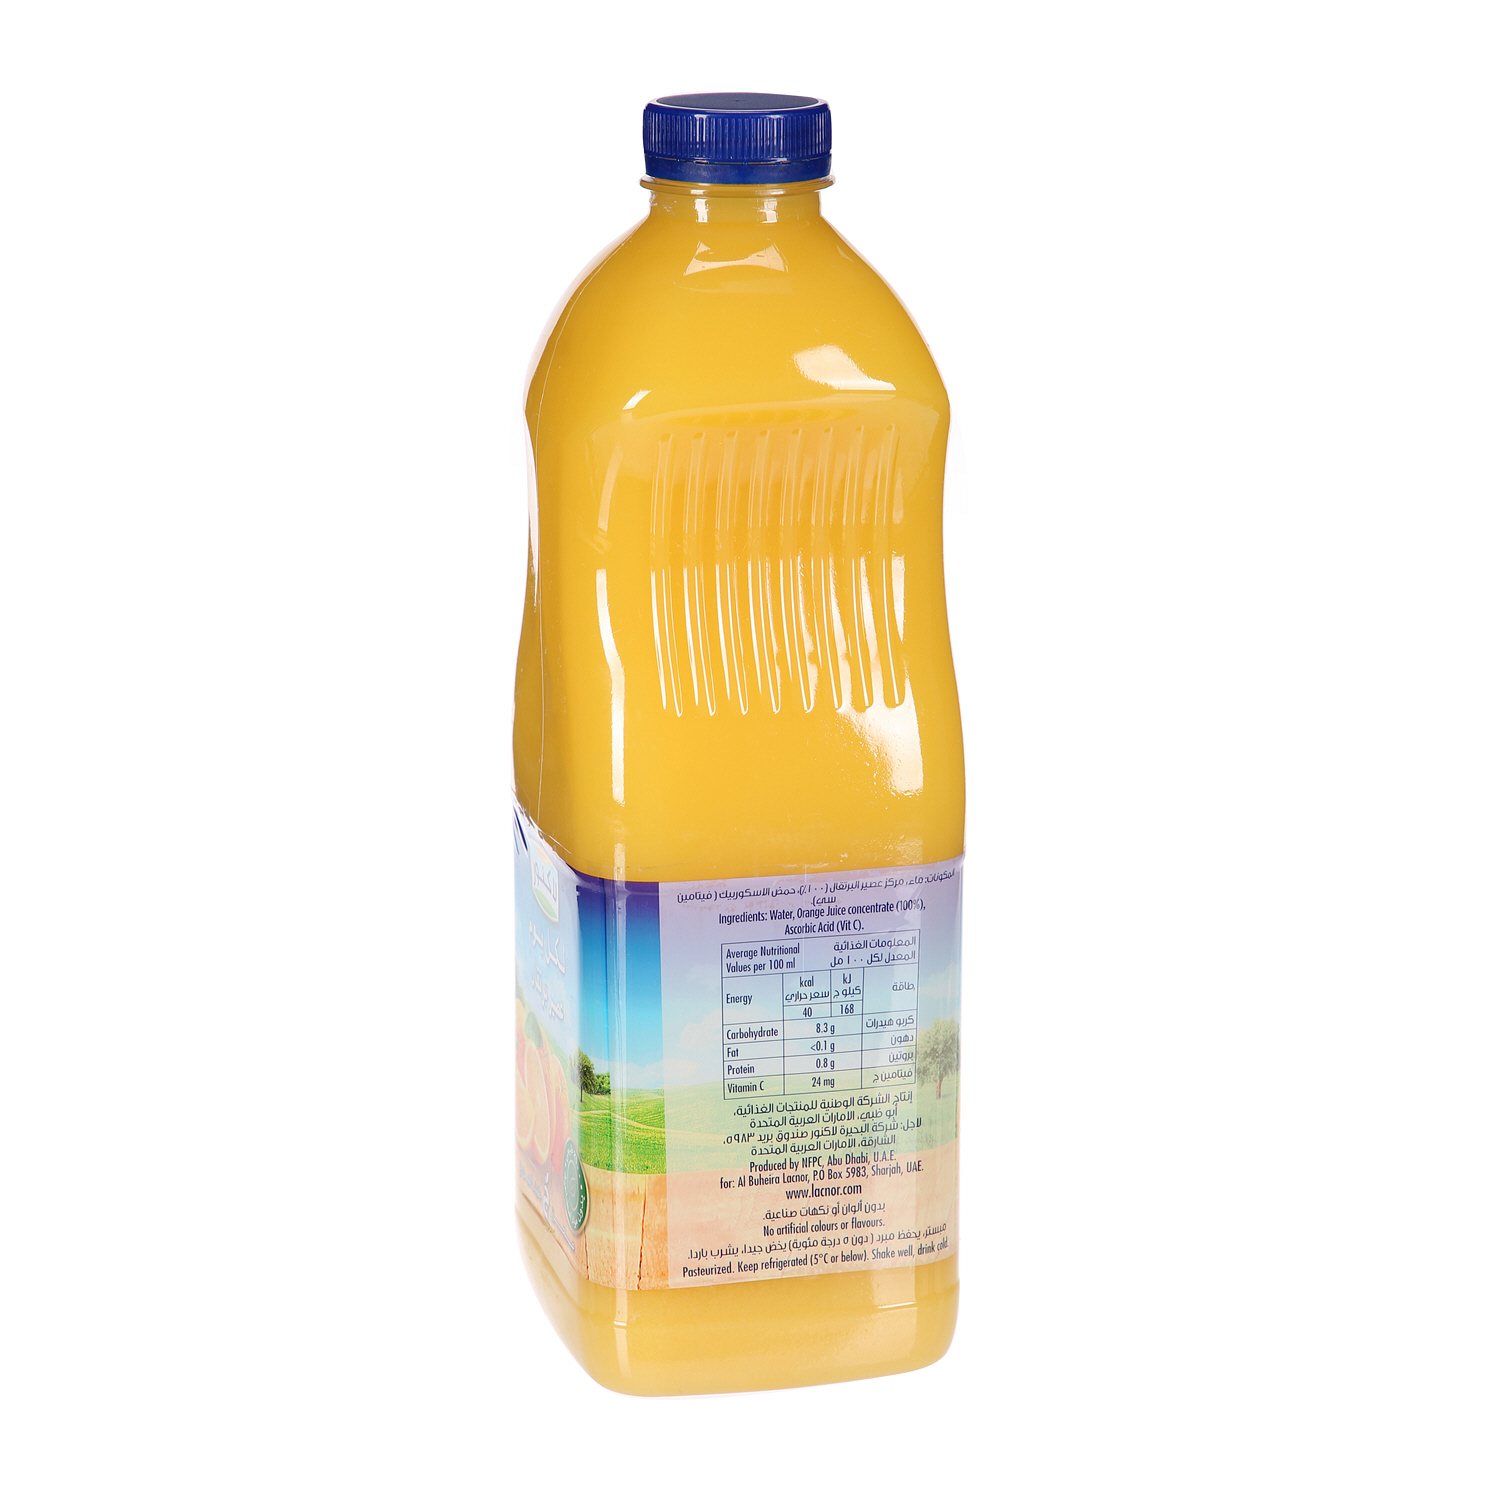 Lacnor Orange Fresh Juice 1.75Liter